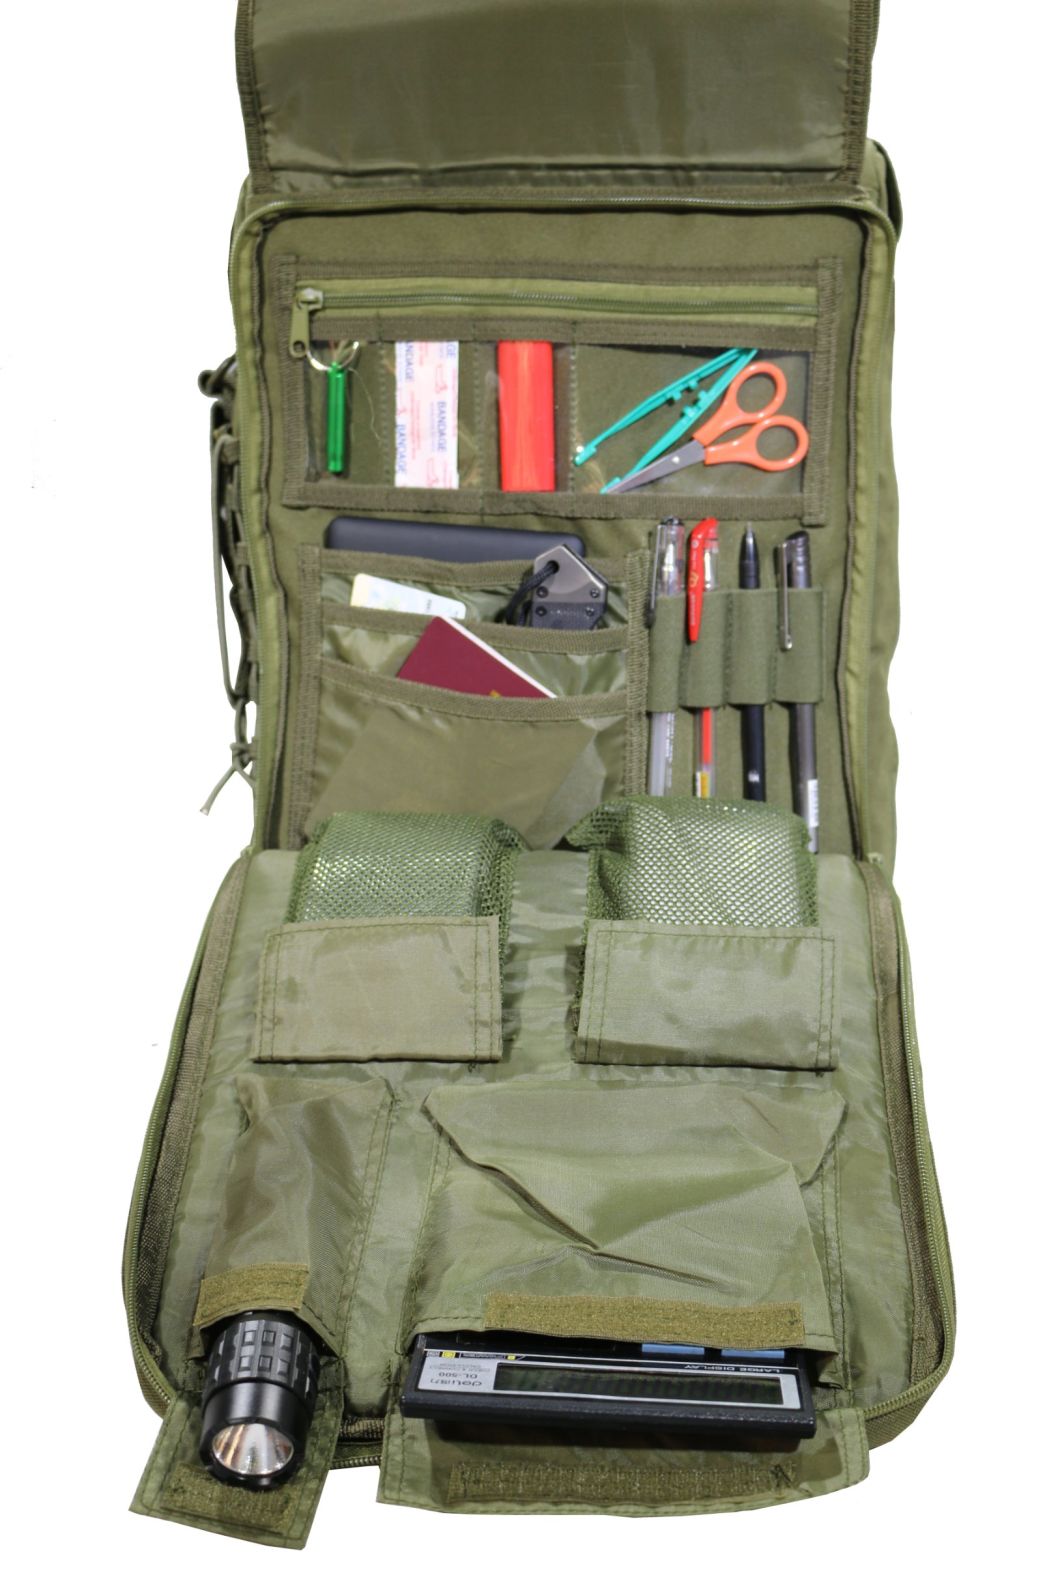 Camouflage Tactical Laptop Bag Military Molle Backpack Handbag